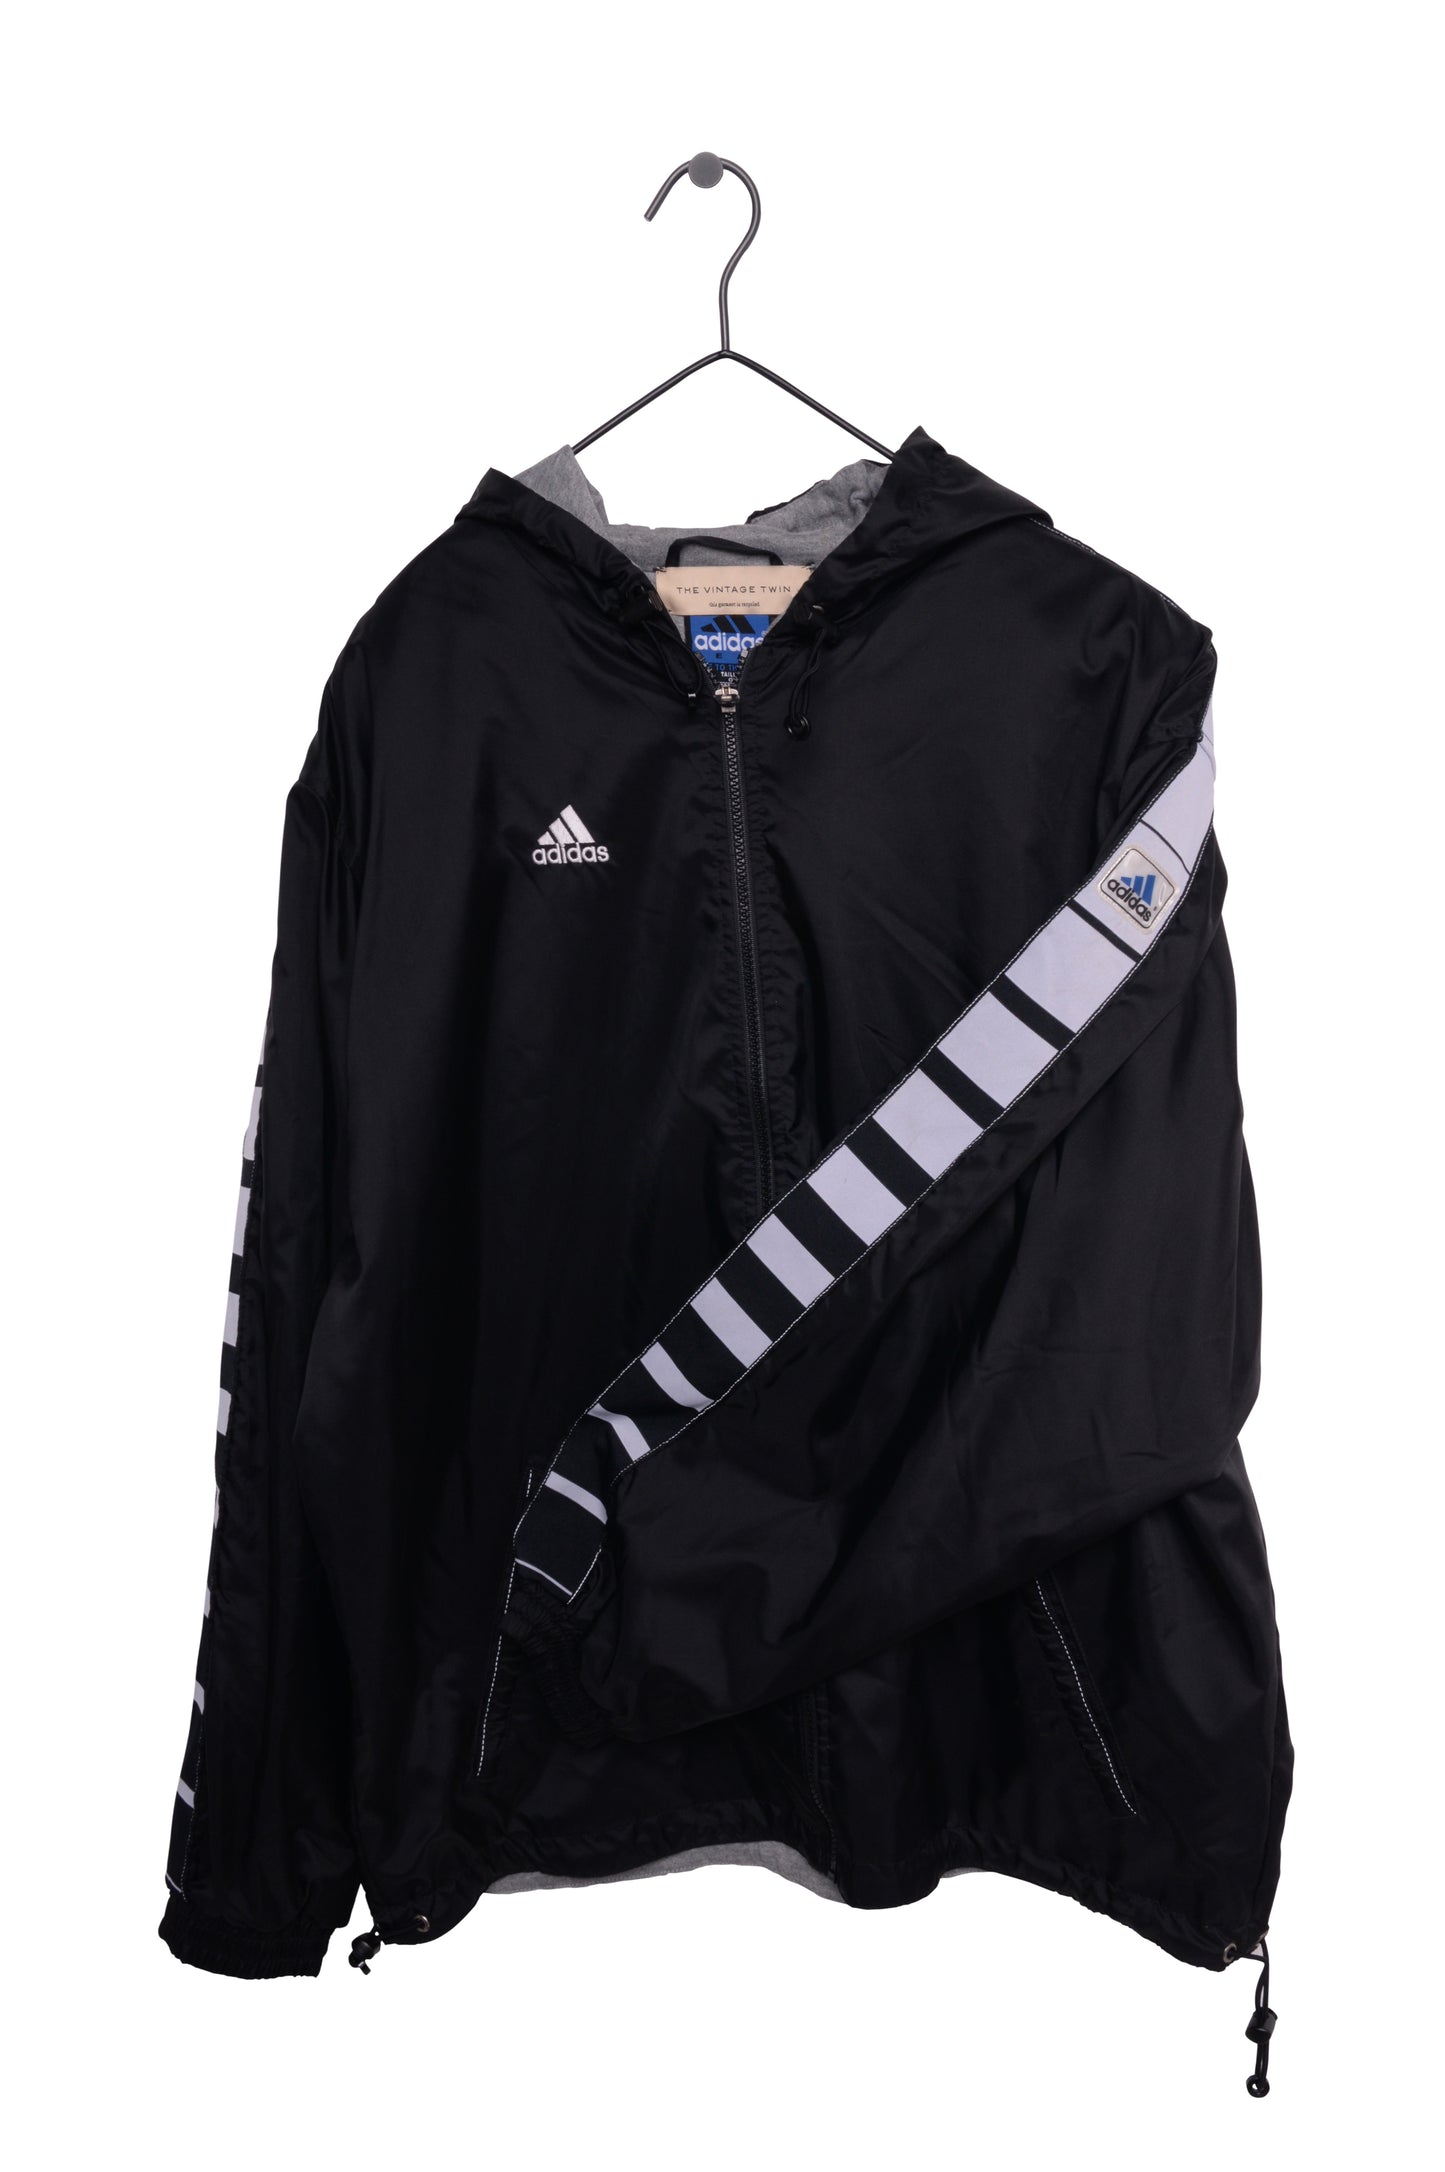 Adidas Lined Windbreaker Jacket